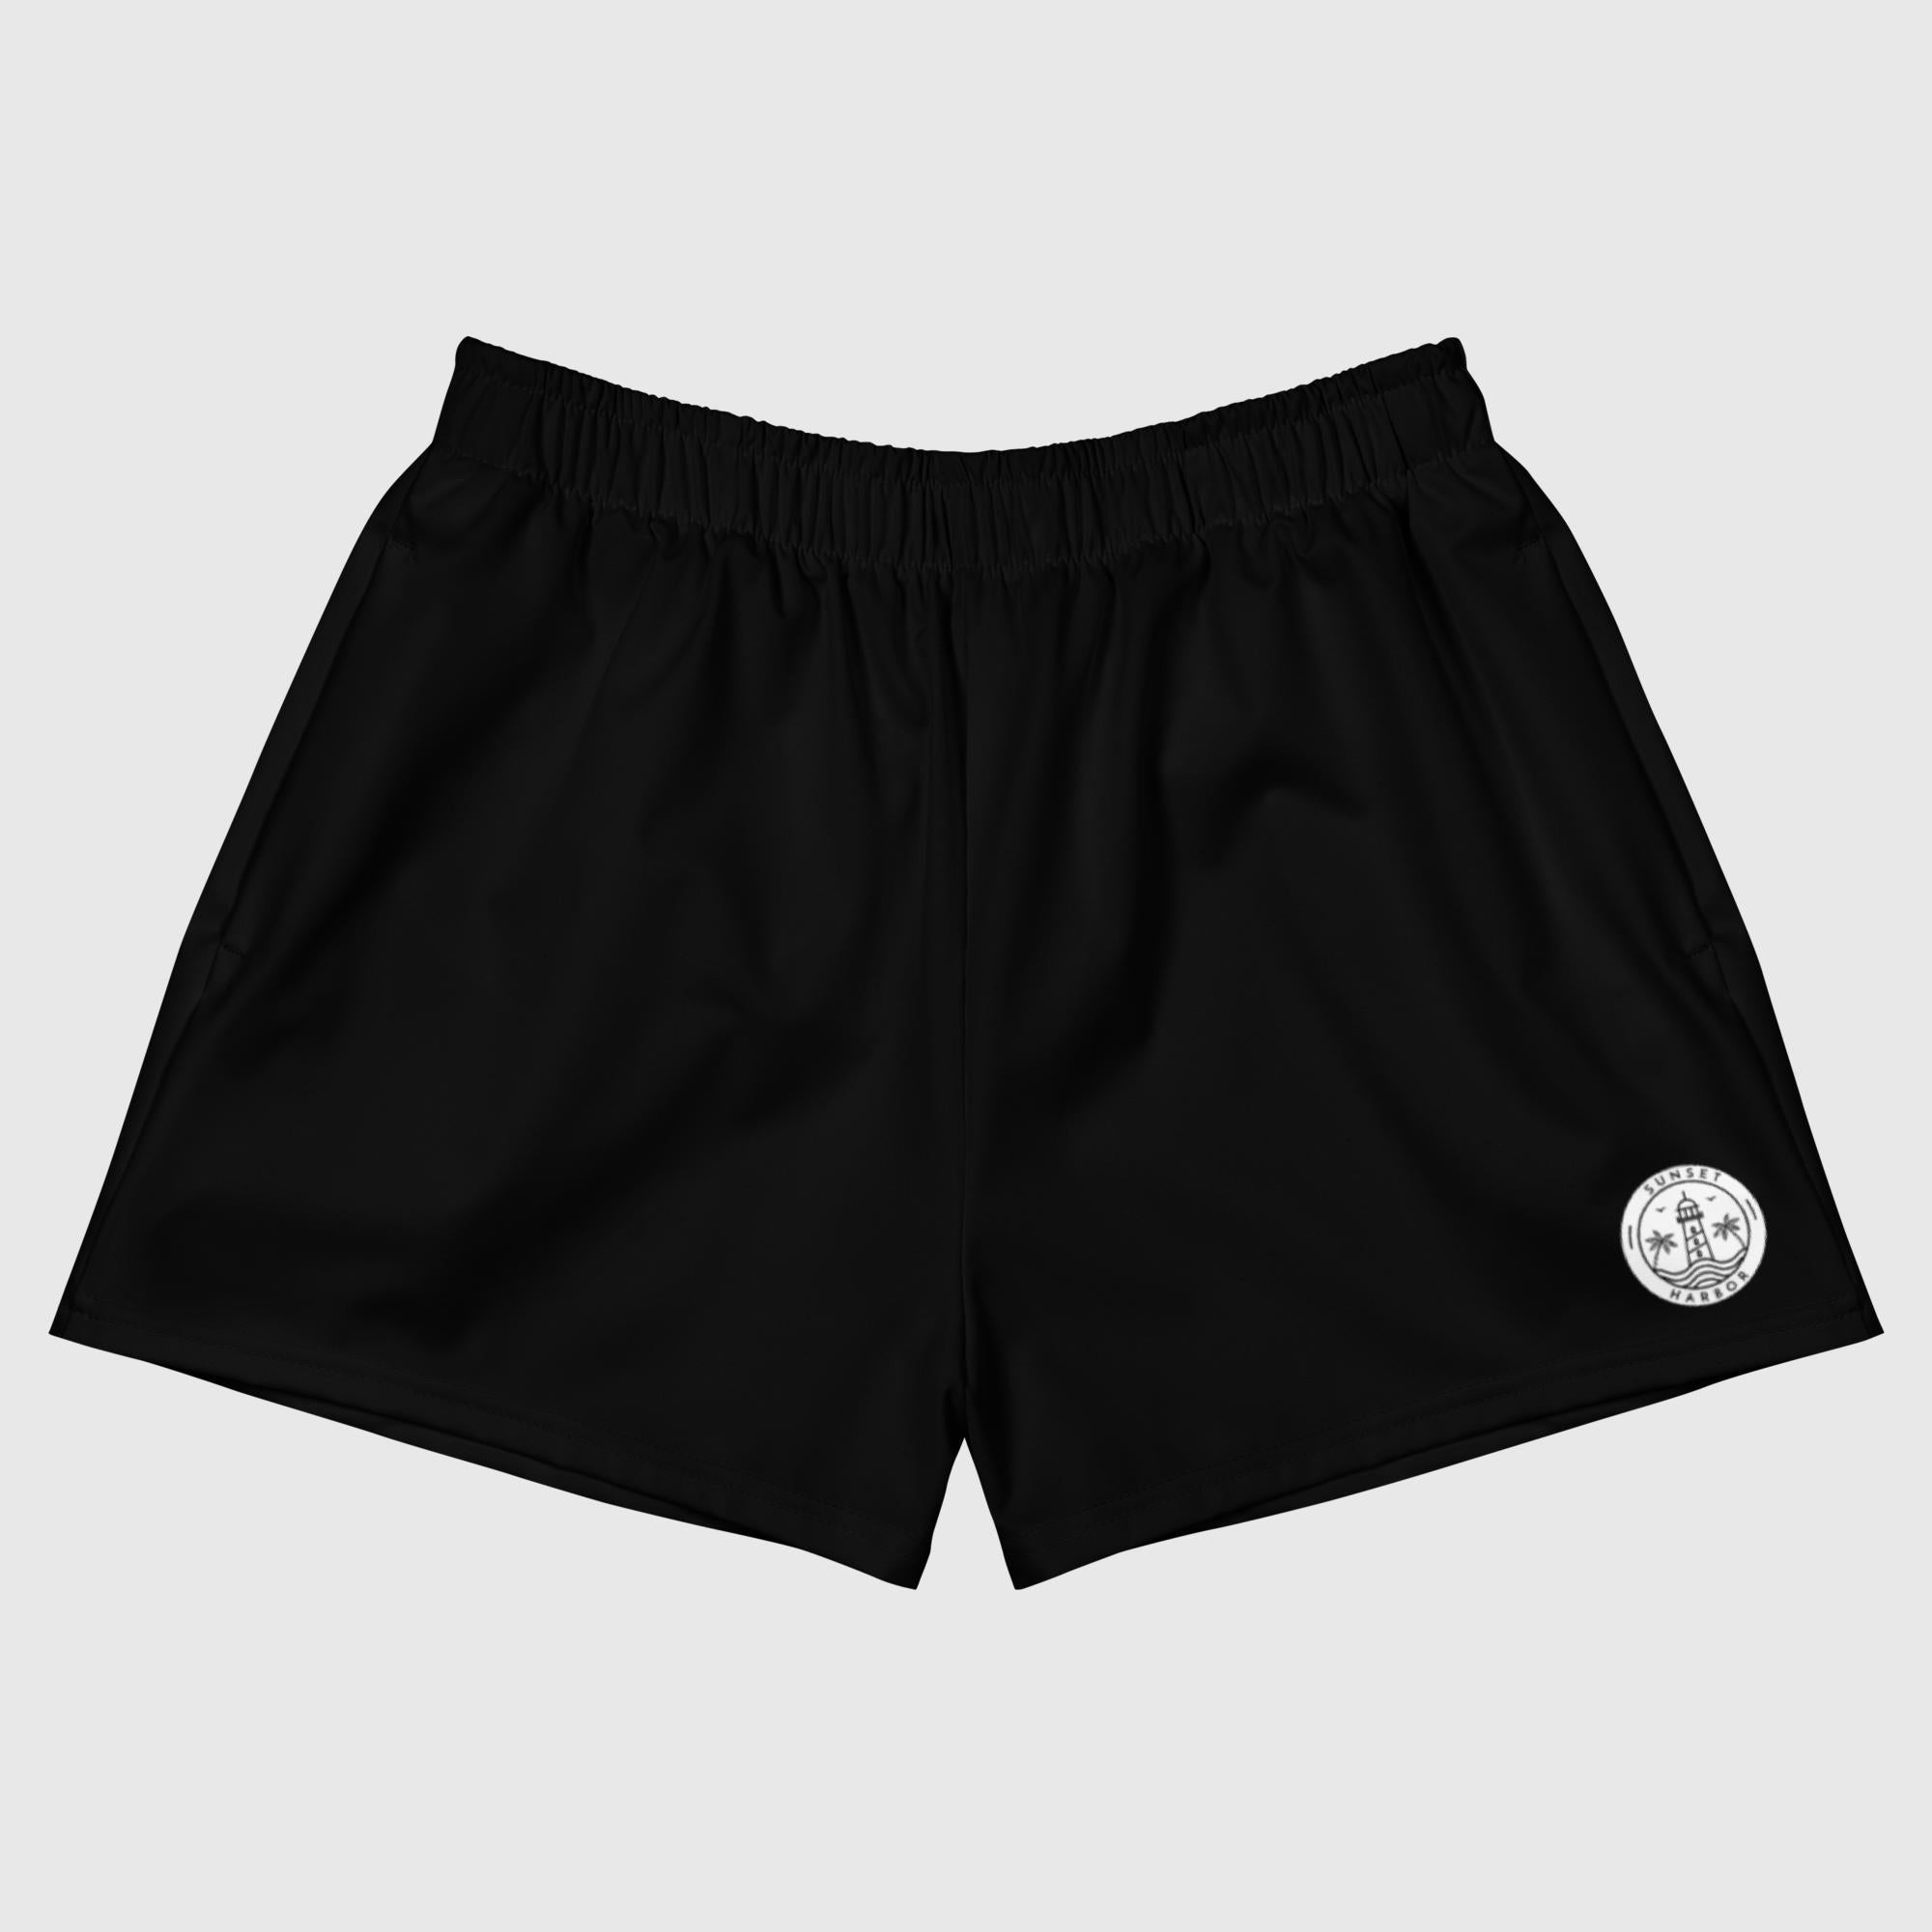 Women's Athletic Short Shorts - Black